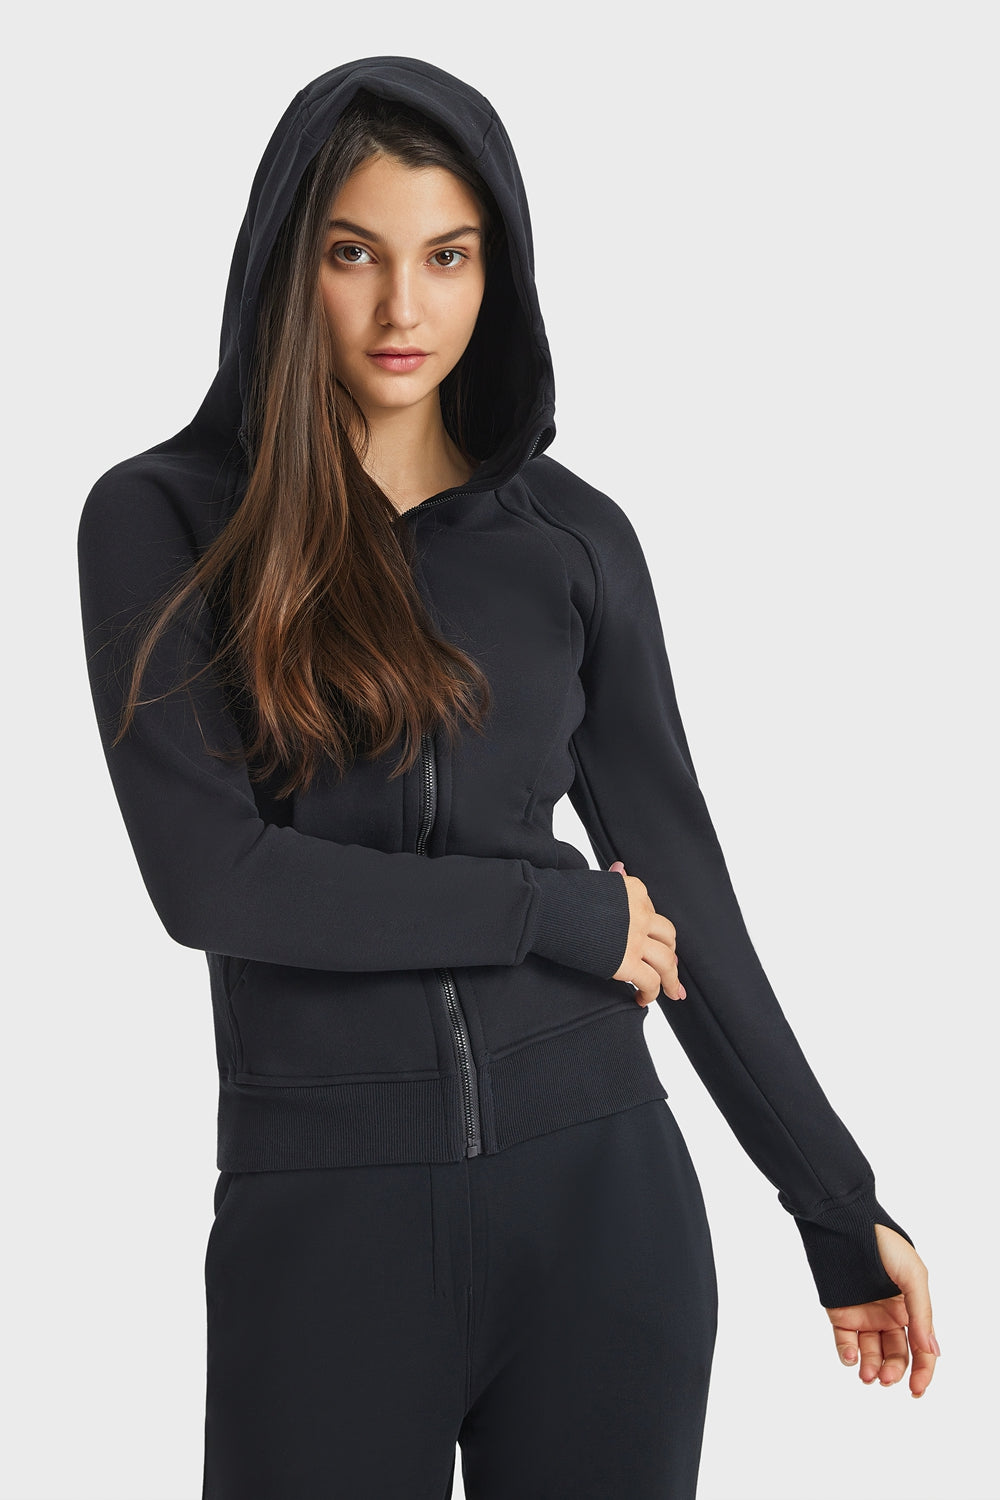 Women’s Zip Up Seam Detail Hooded Sports Jacket